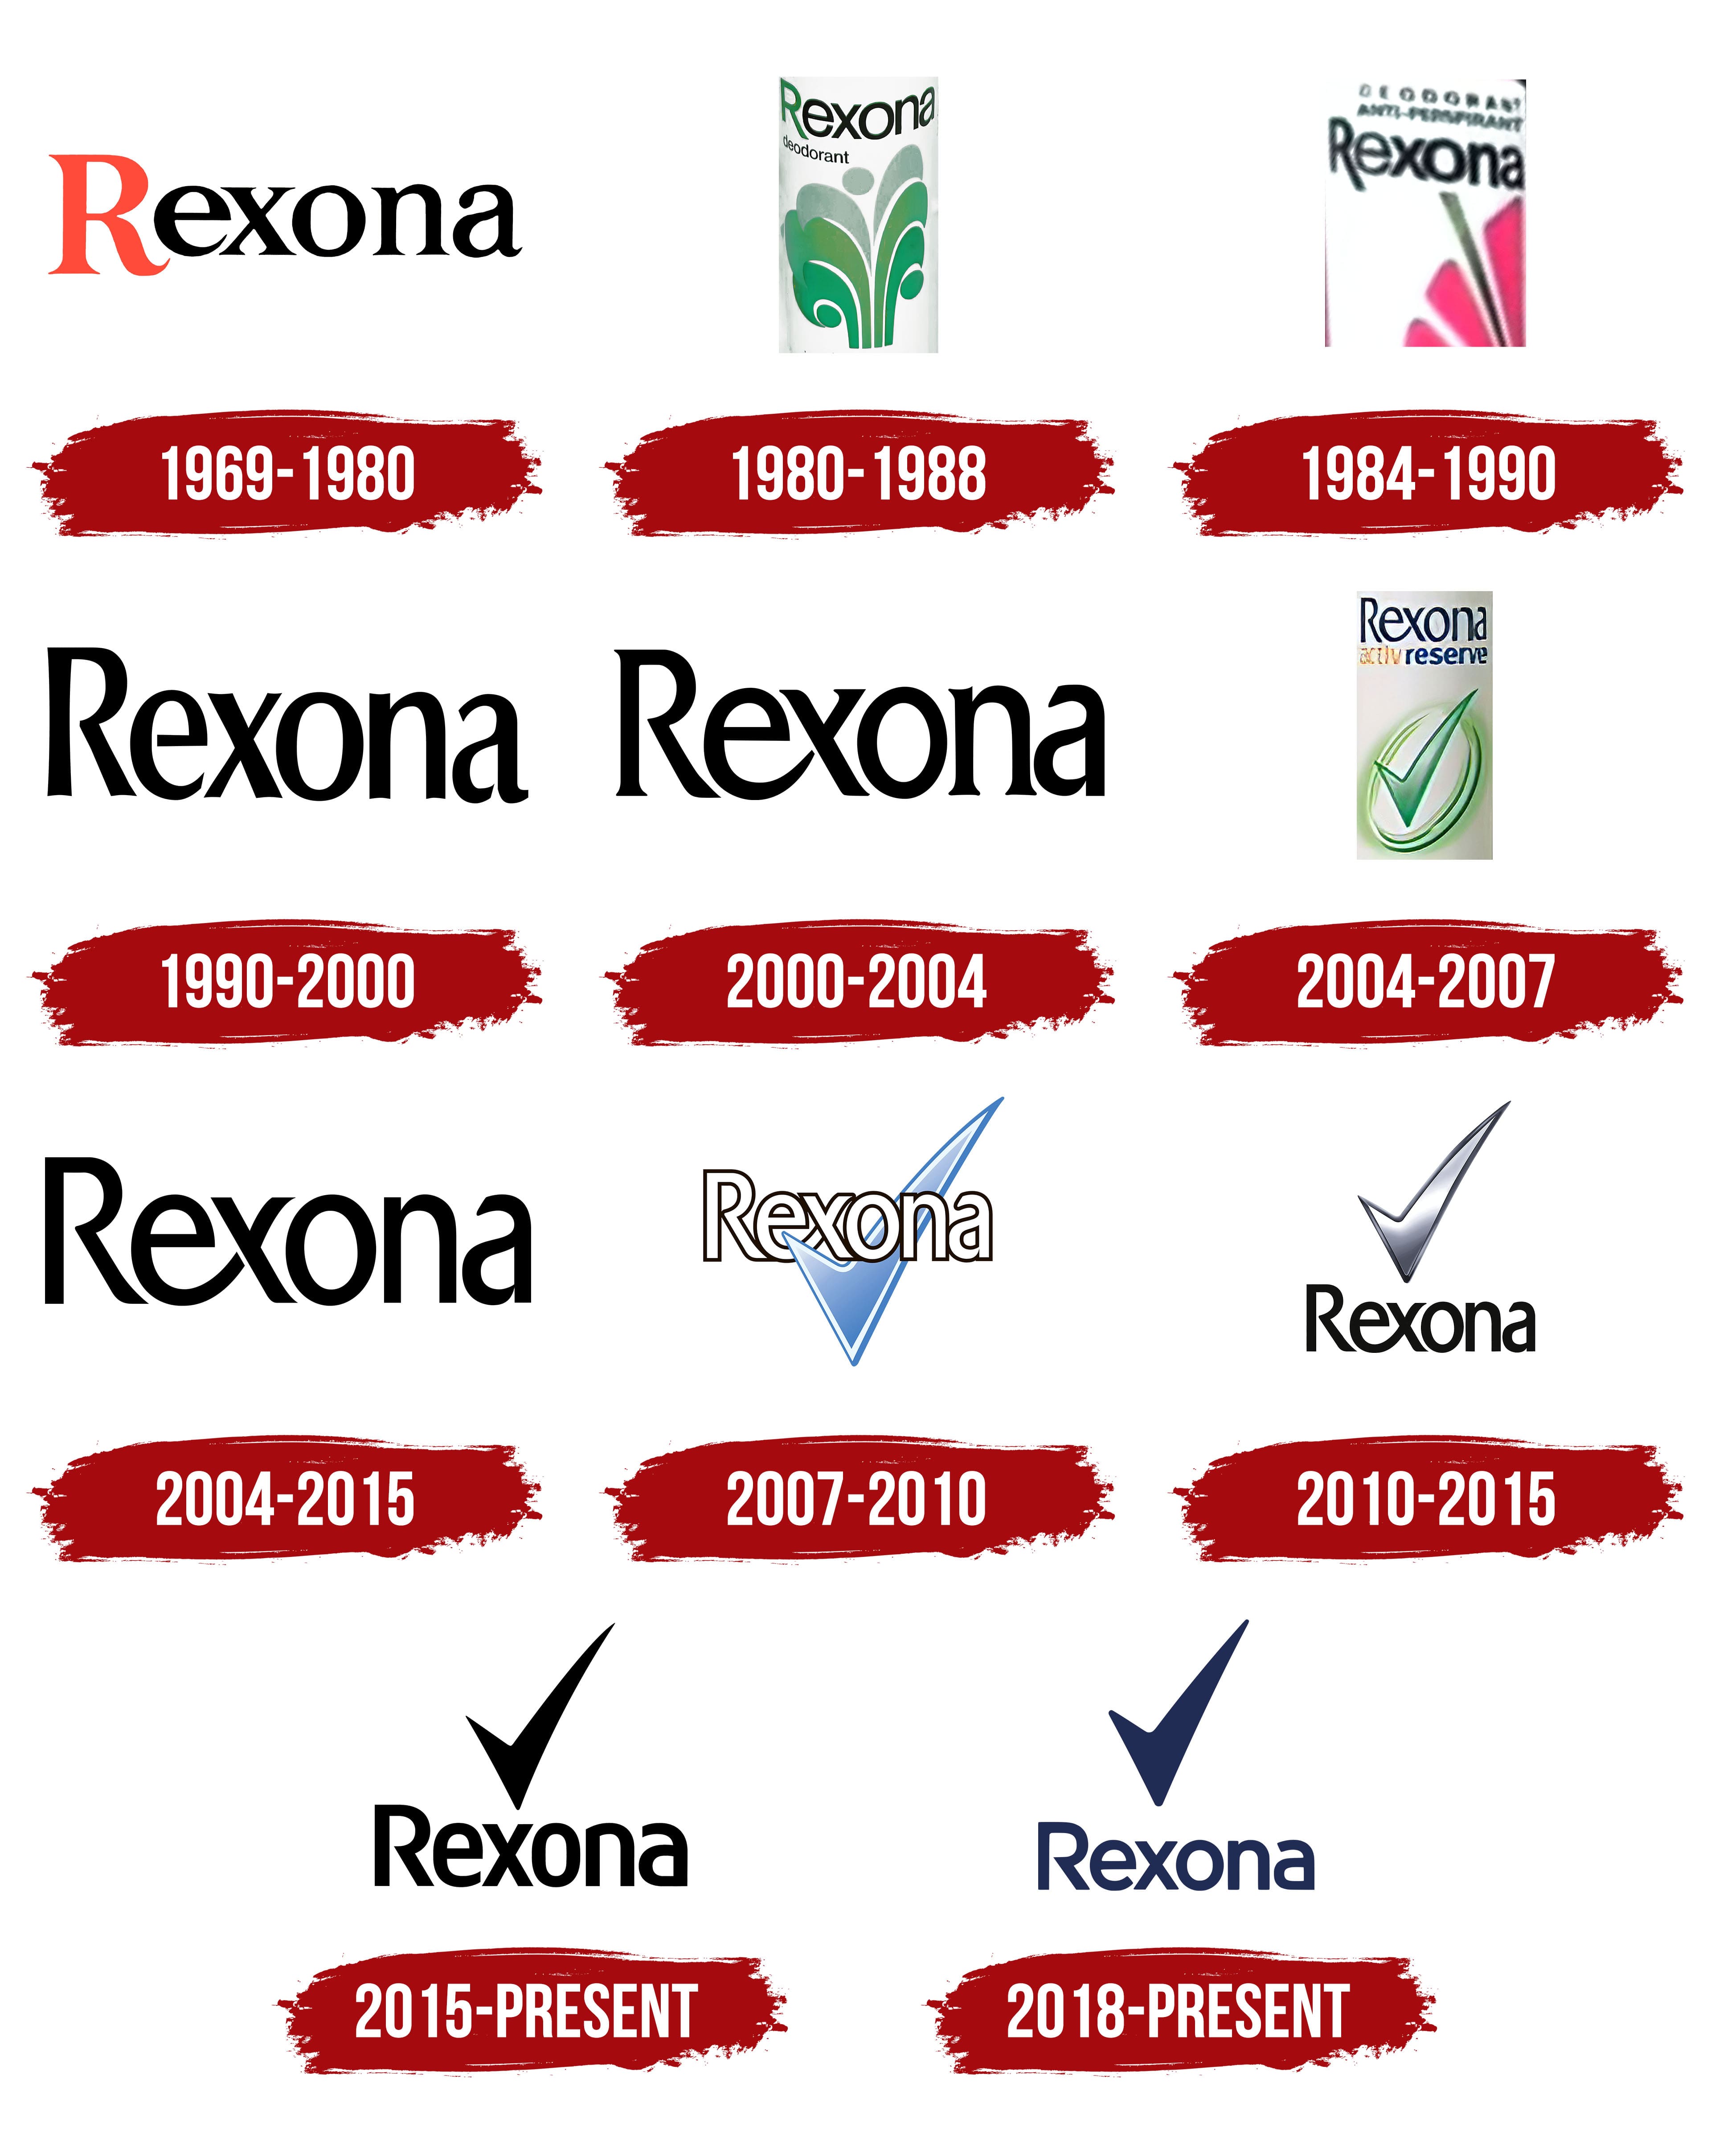 Rexona - Wikipedia